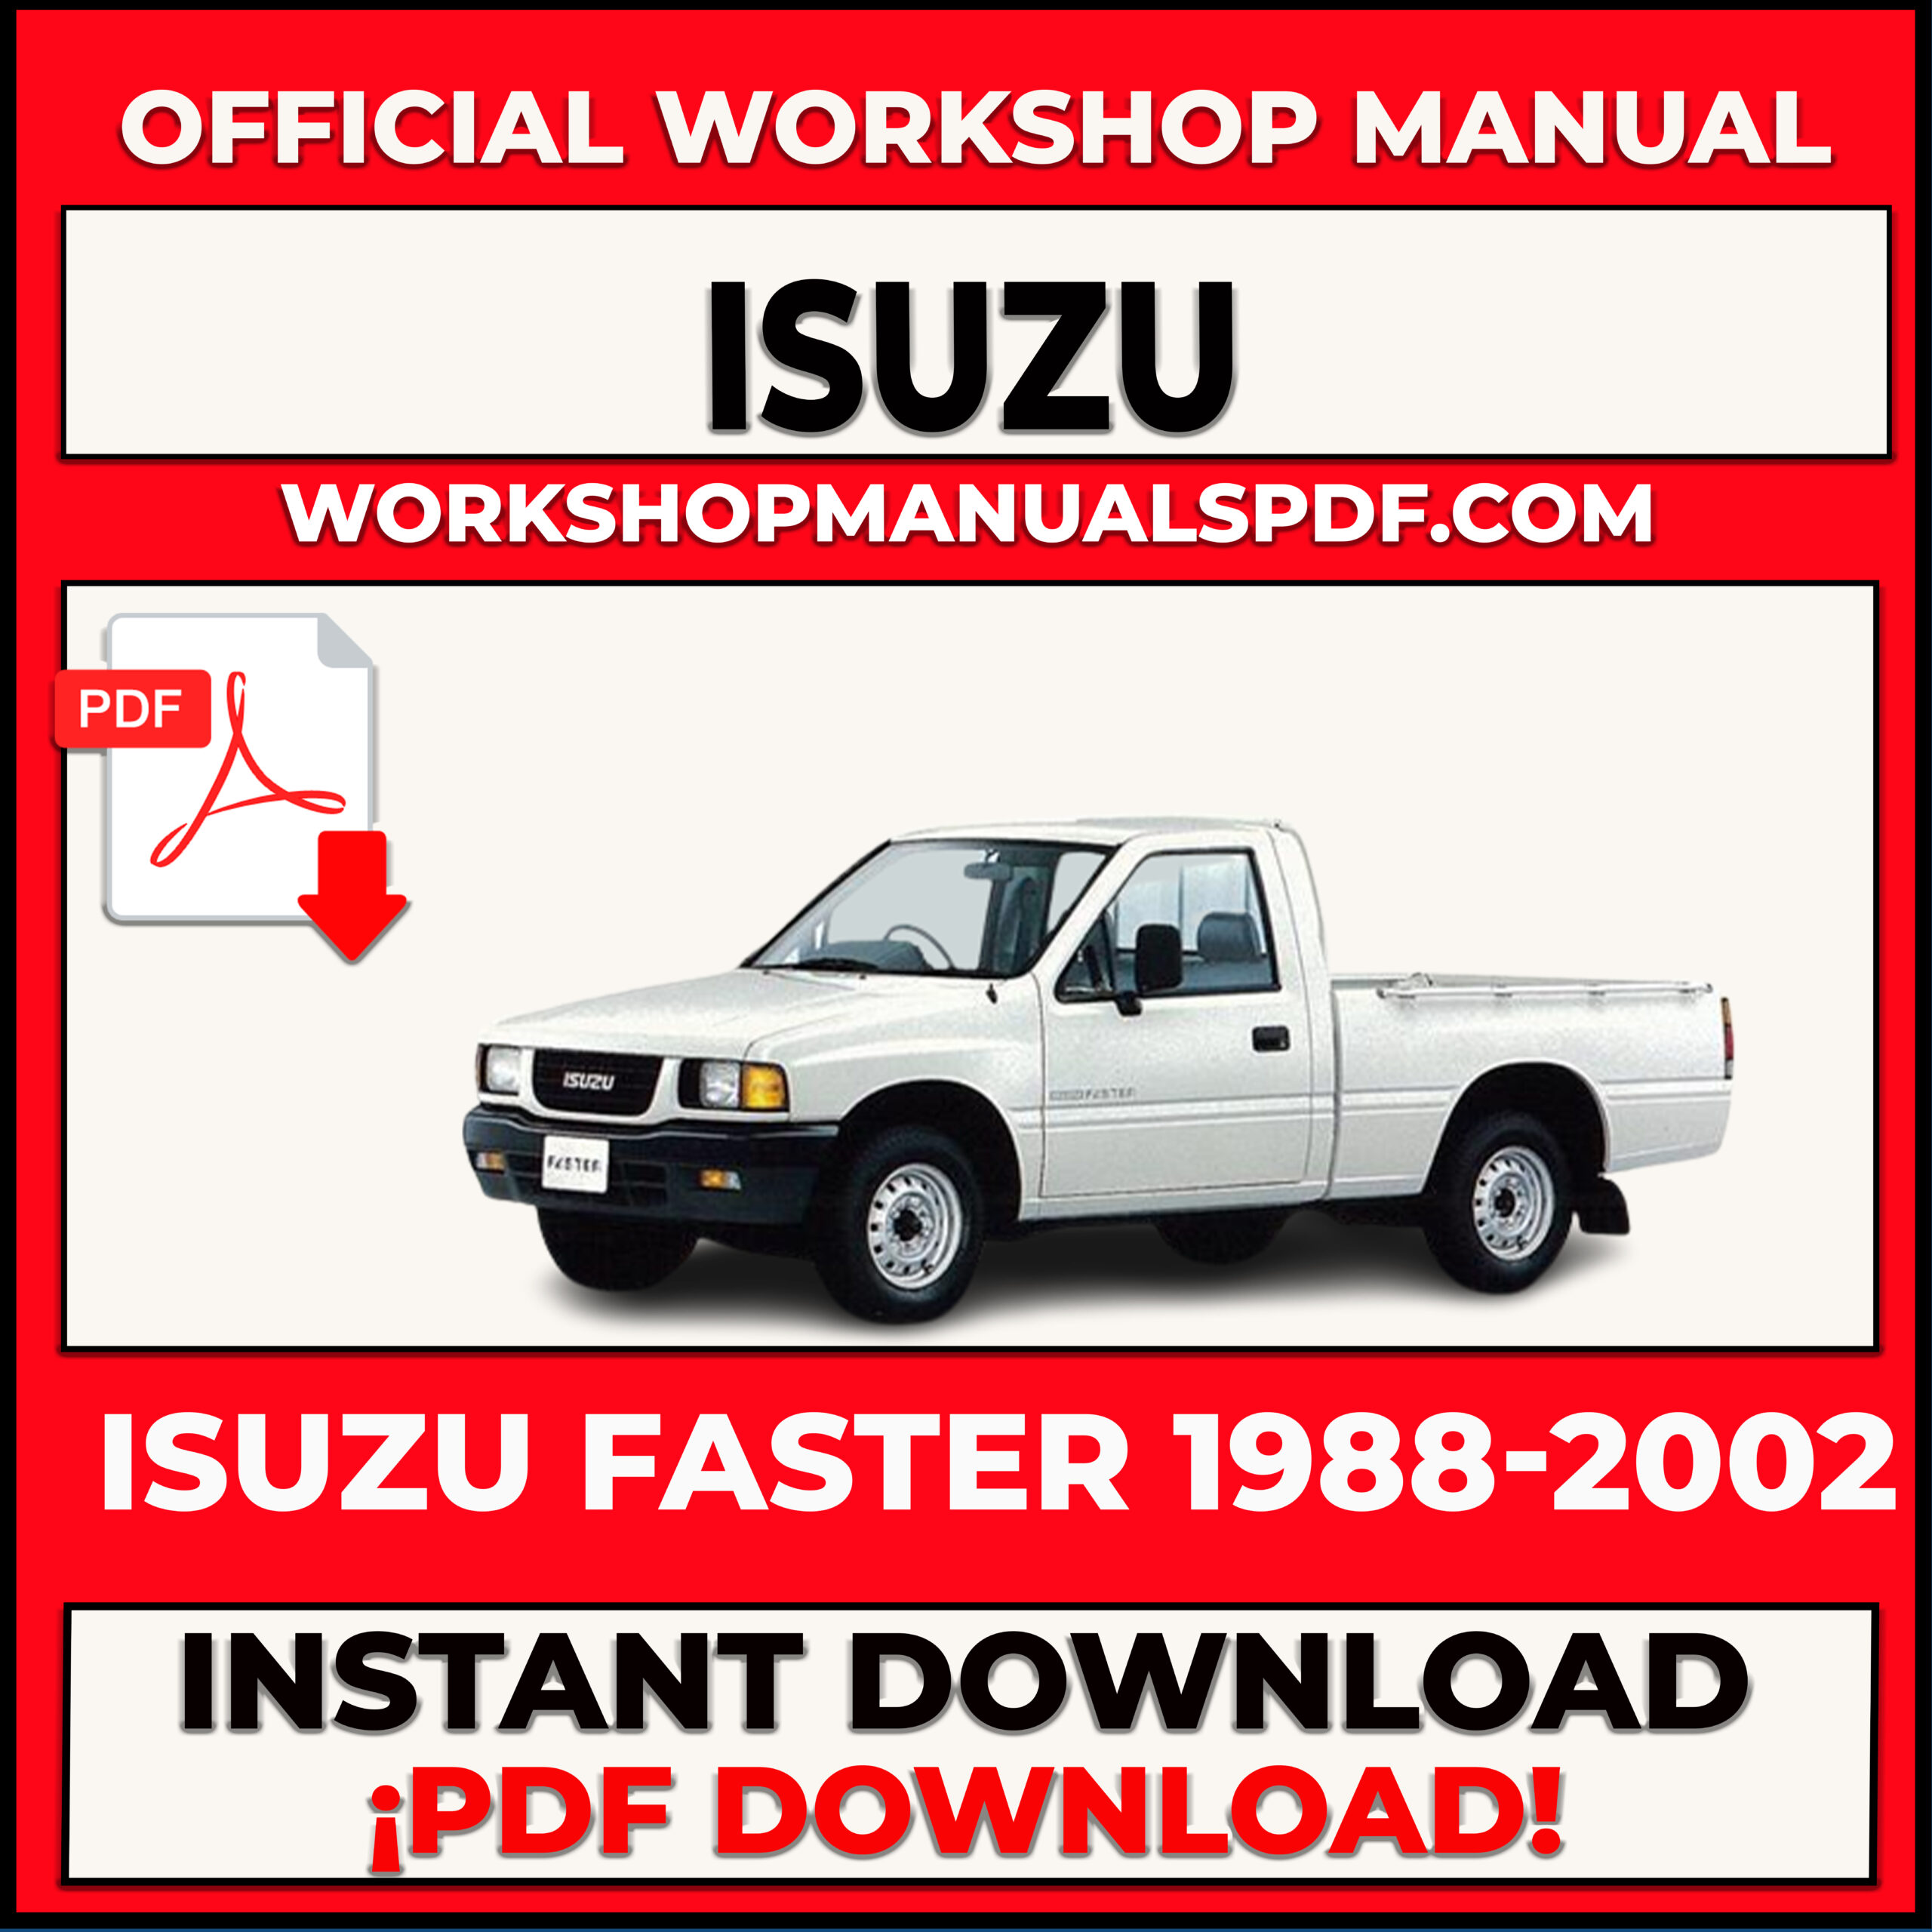 Isuzu Faster 1988-2002 Workshop Repair Manual